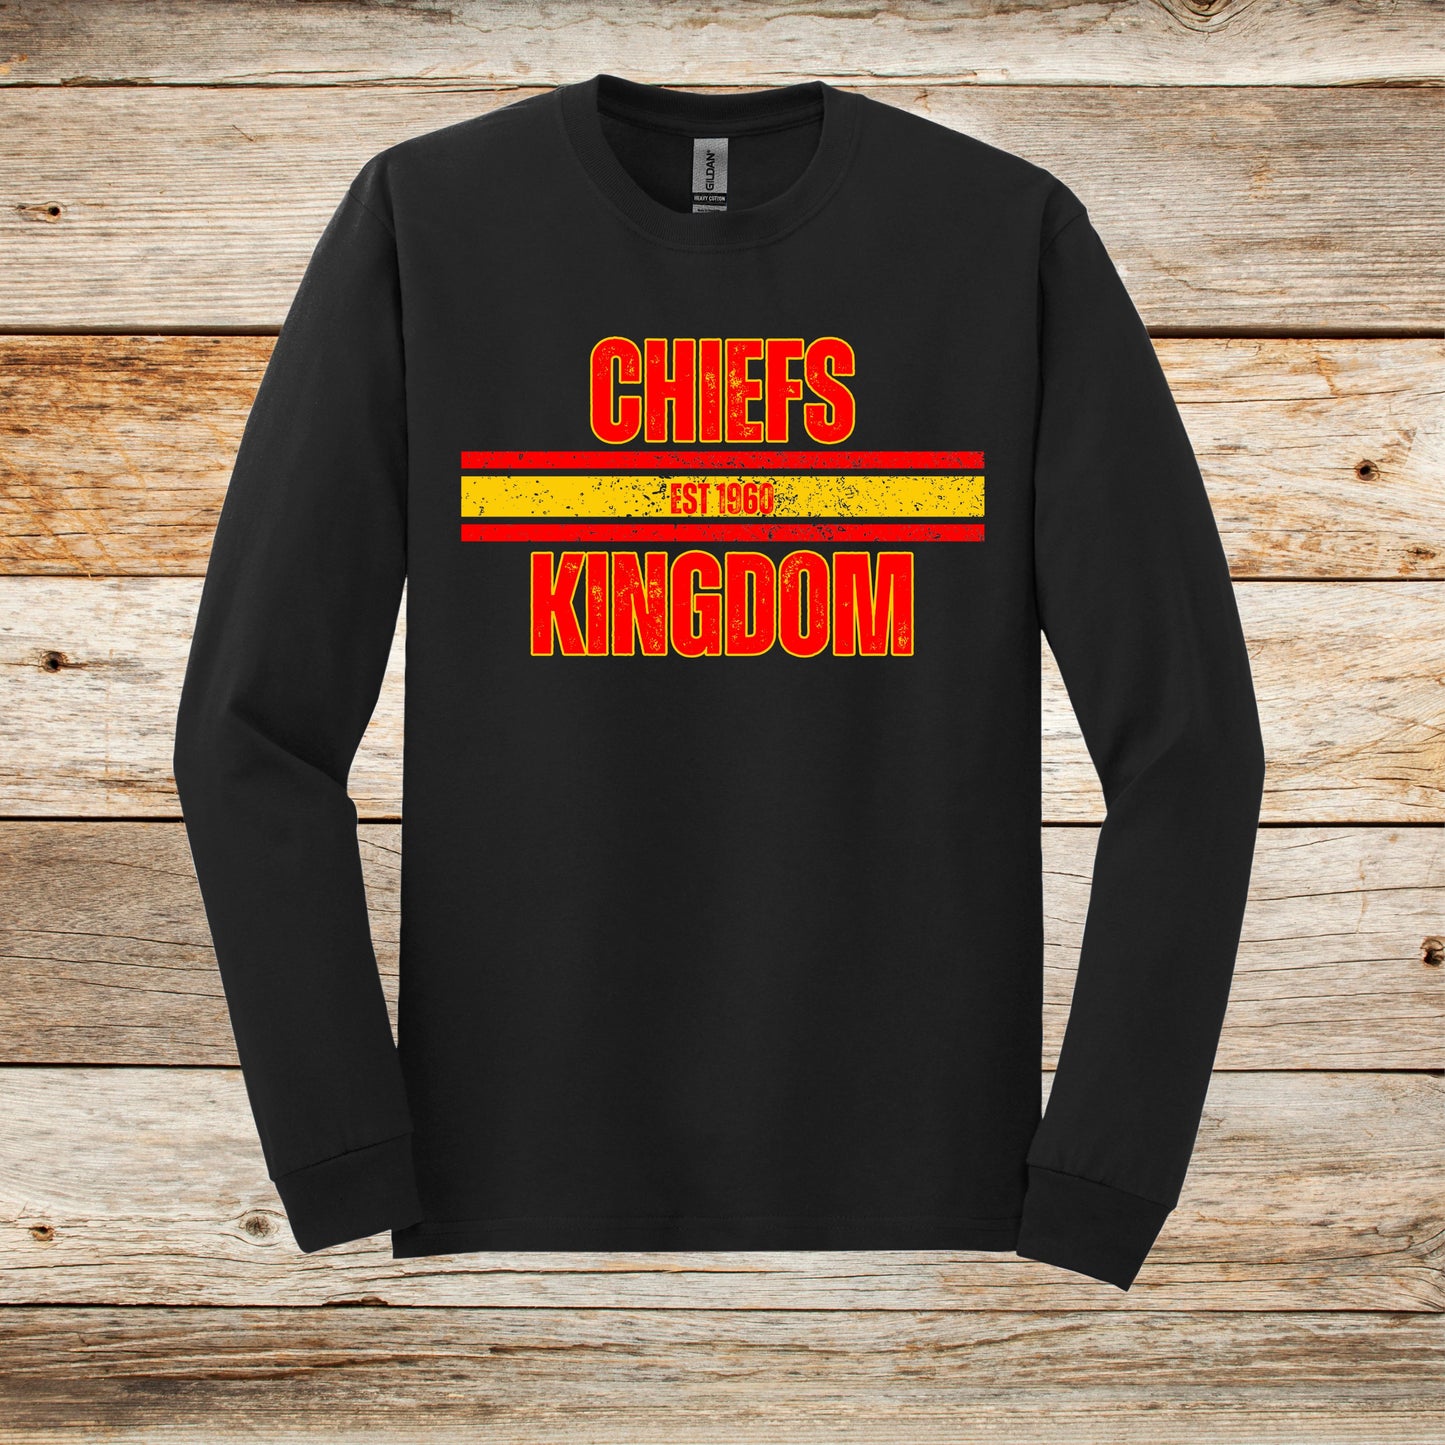 Football Long Sleeve T-Shirt - Chiefs Football - Chiefs Kingdom - Adult and Children's Tee Shirts - Sports Long Sleeve T-Shirts Graphic Avenue Black Adult Small 